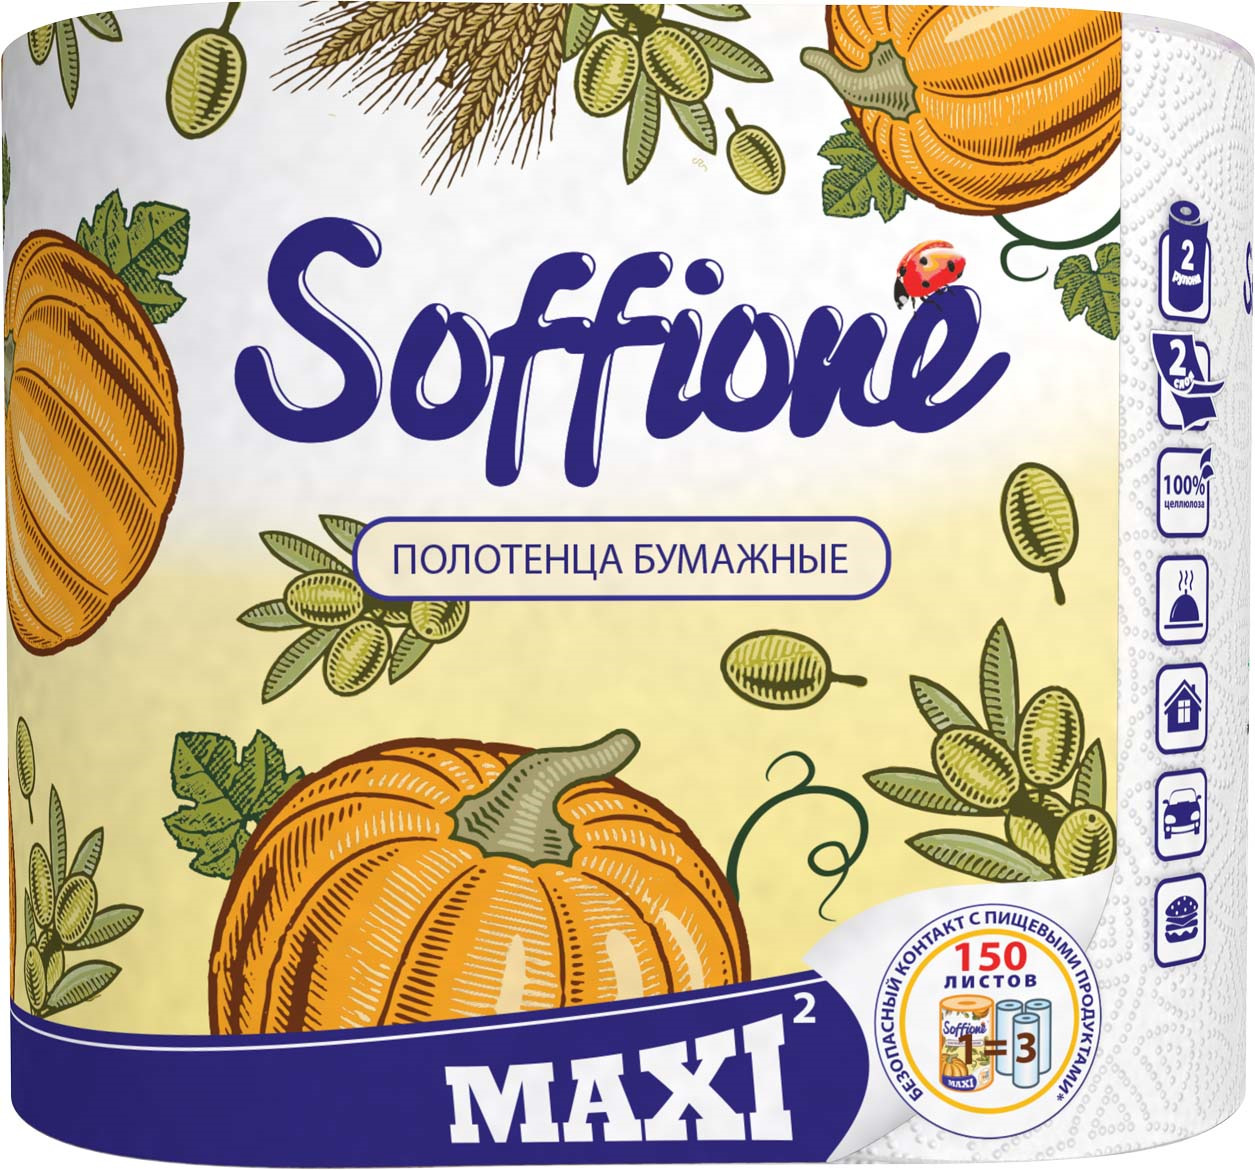 Бумажные полотенца Soffione Maxi, 2 рулона